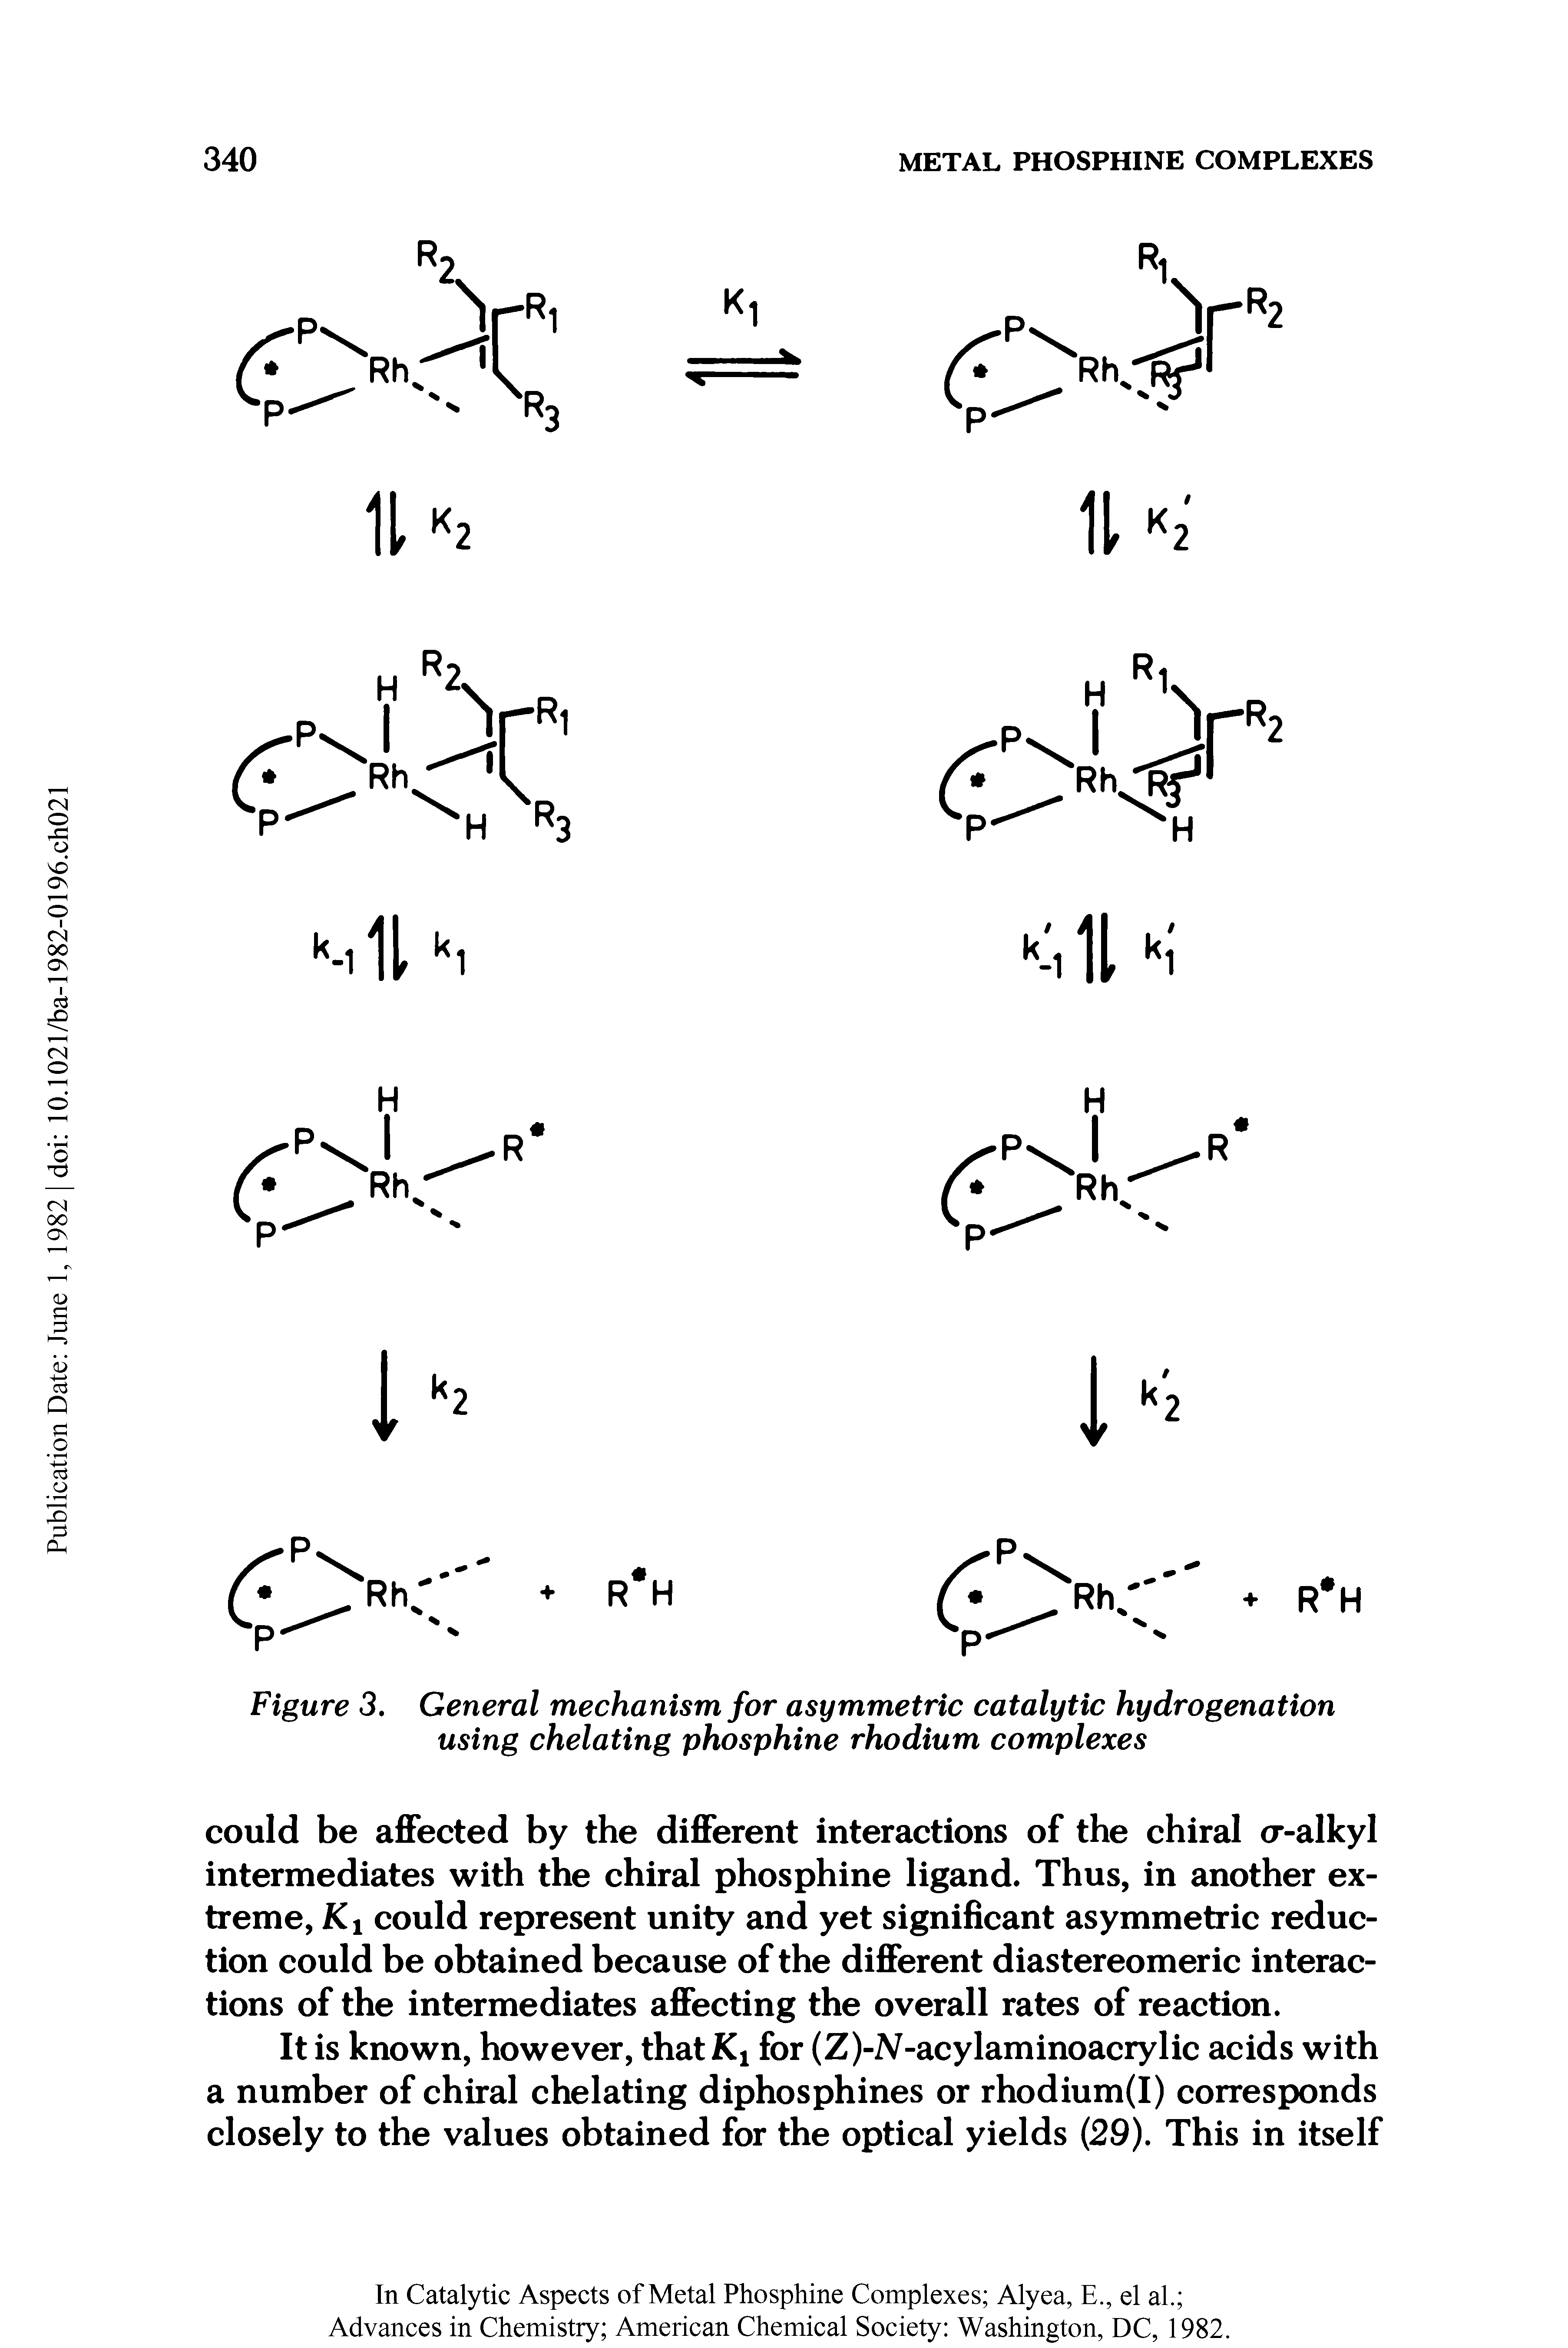 Figure 3. General mechanism for asymmetric catalytic hydrogenation using chelating phosphine rhodium complexes...